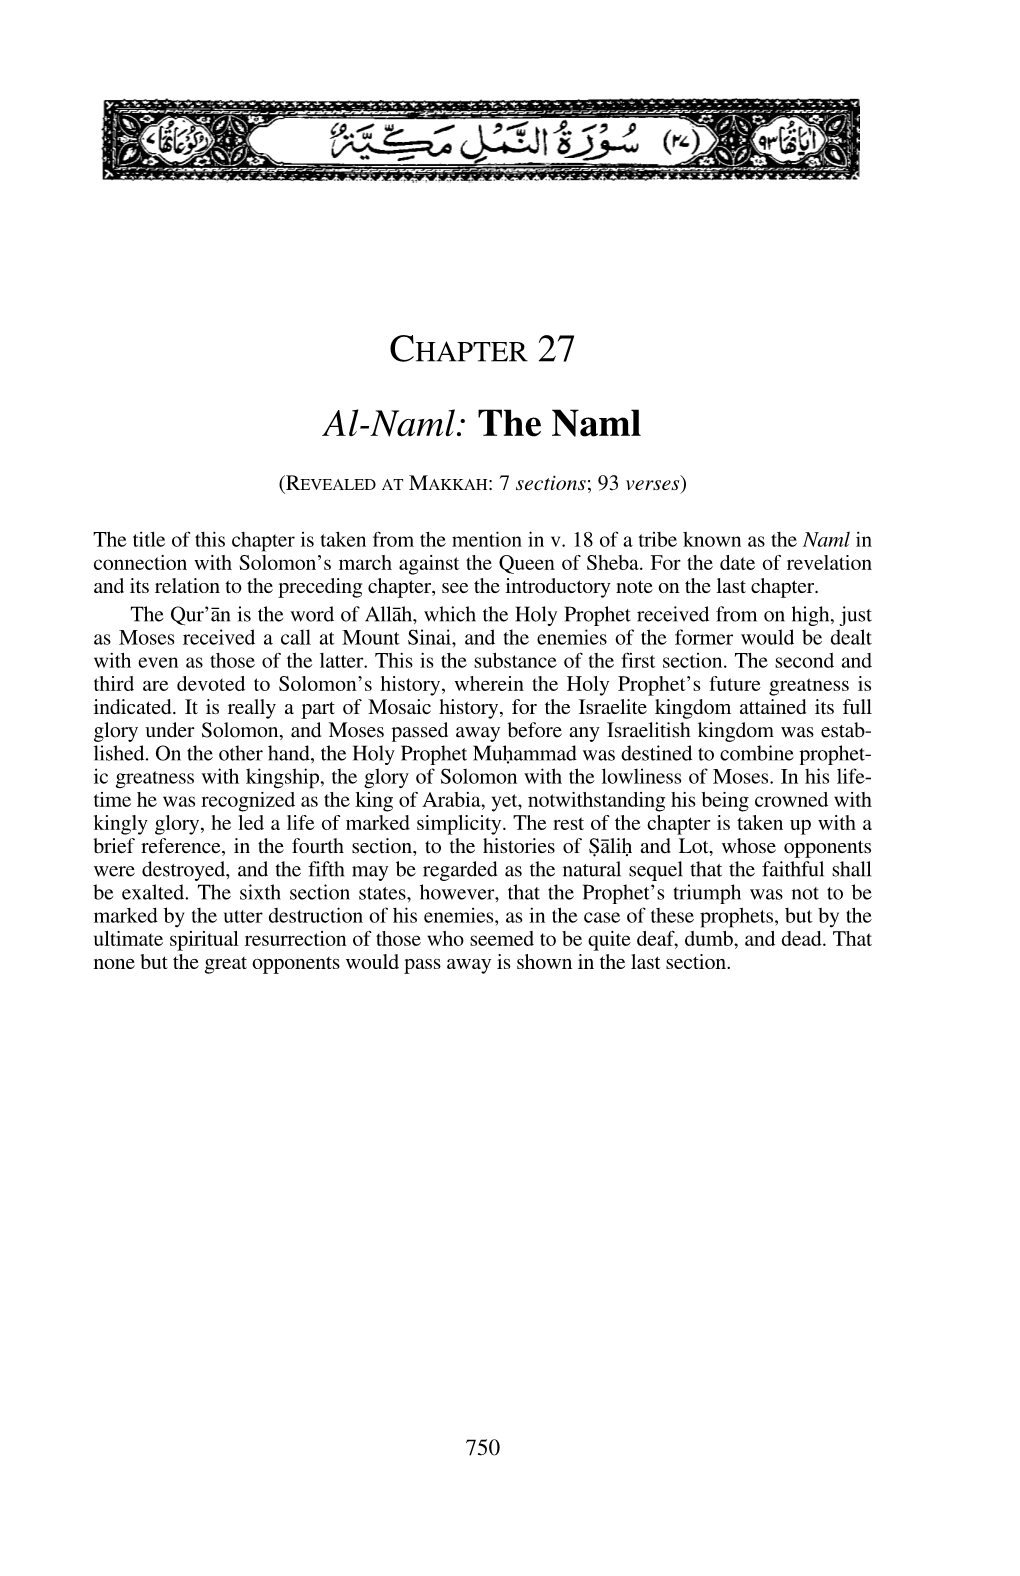 CHAPTER 27 Al-Naml: the Naml